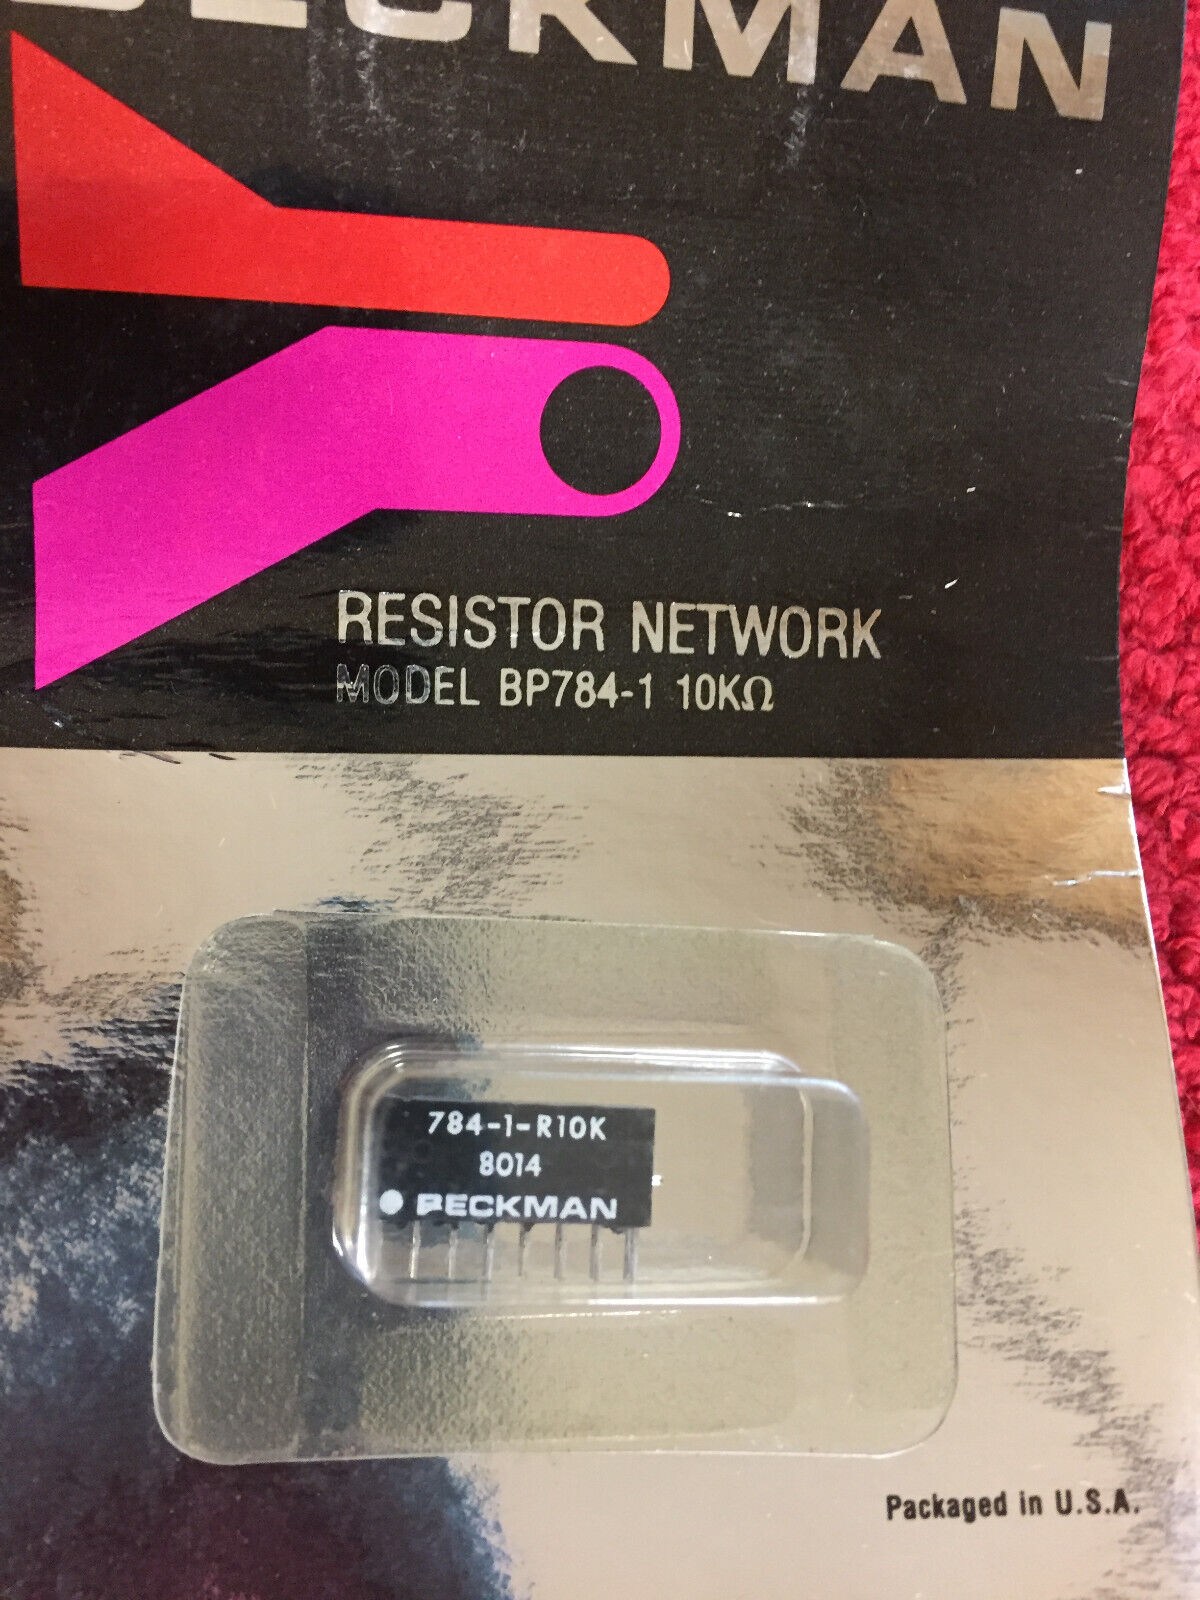 784-1-R10K BECKMAN RESISTOR NETWORK 5 PCS